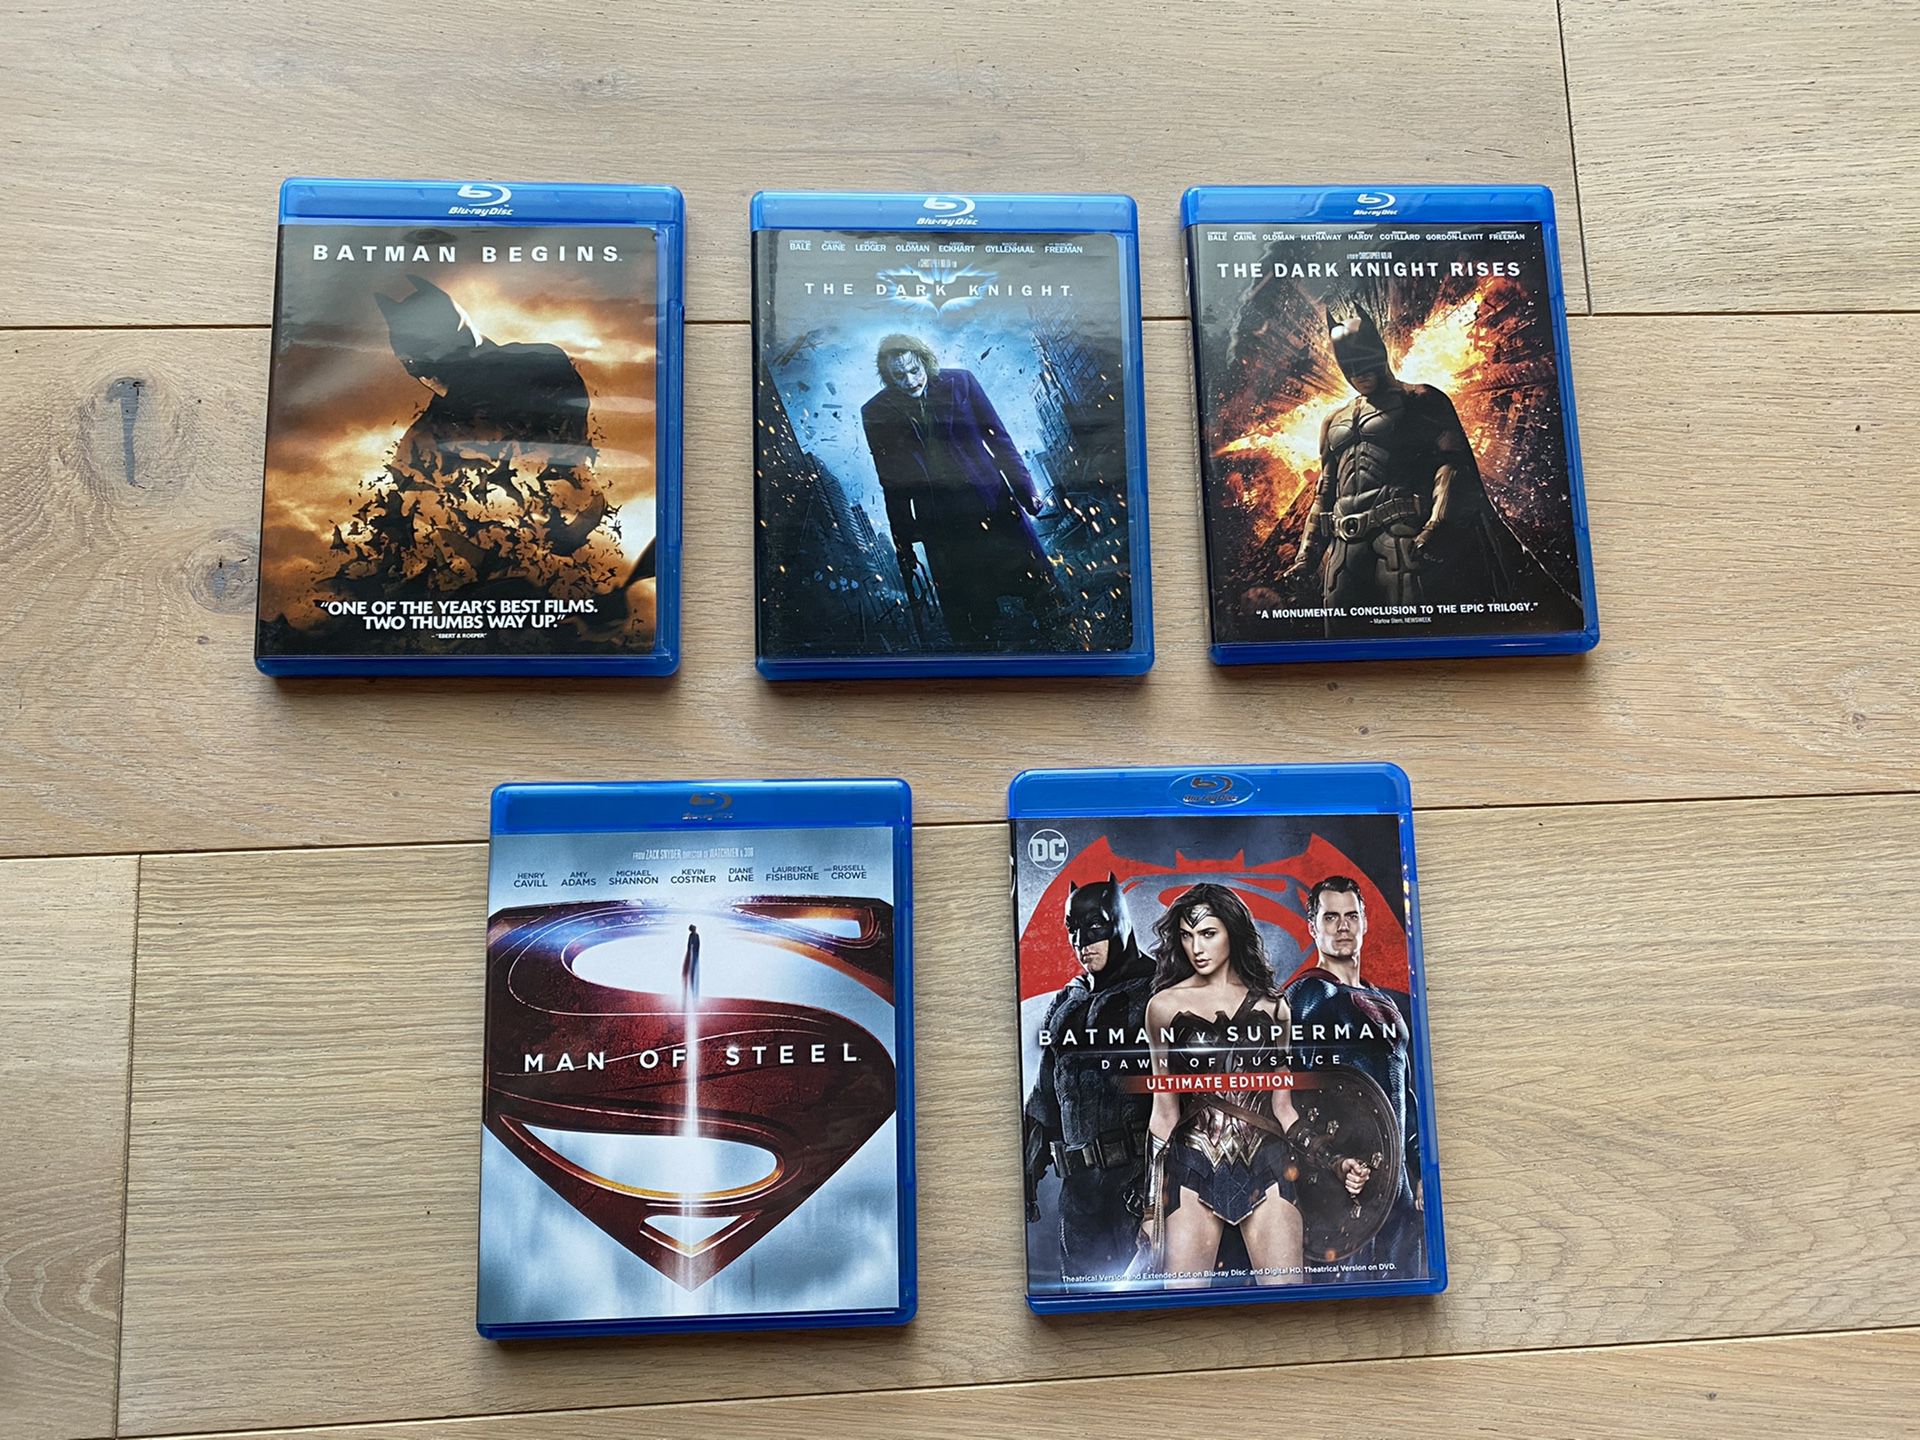 Batman and Superman DC Super hero Blu-rays